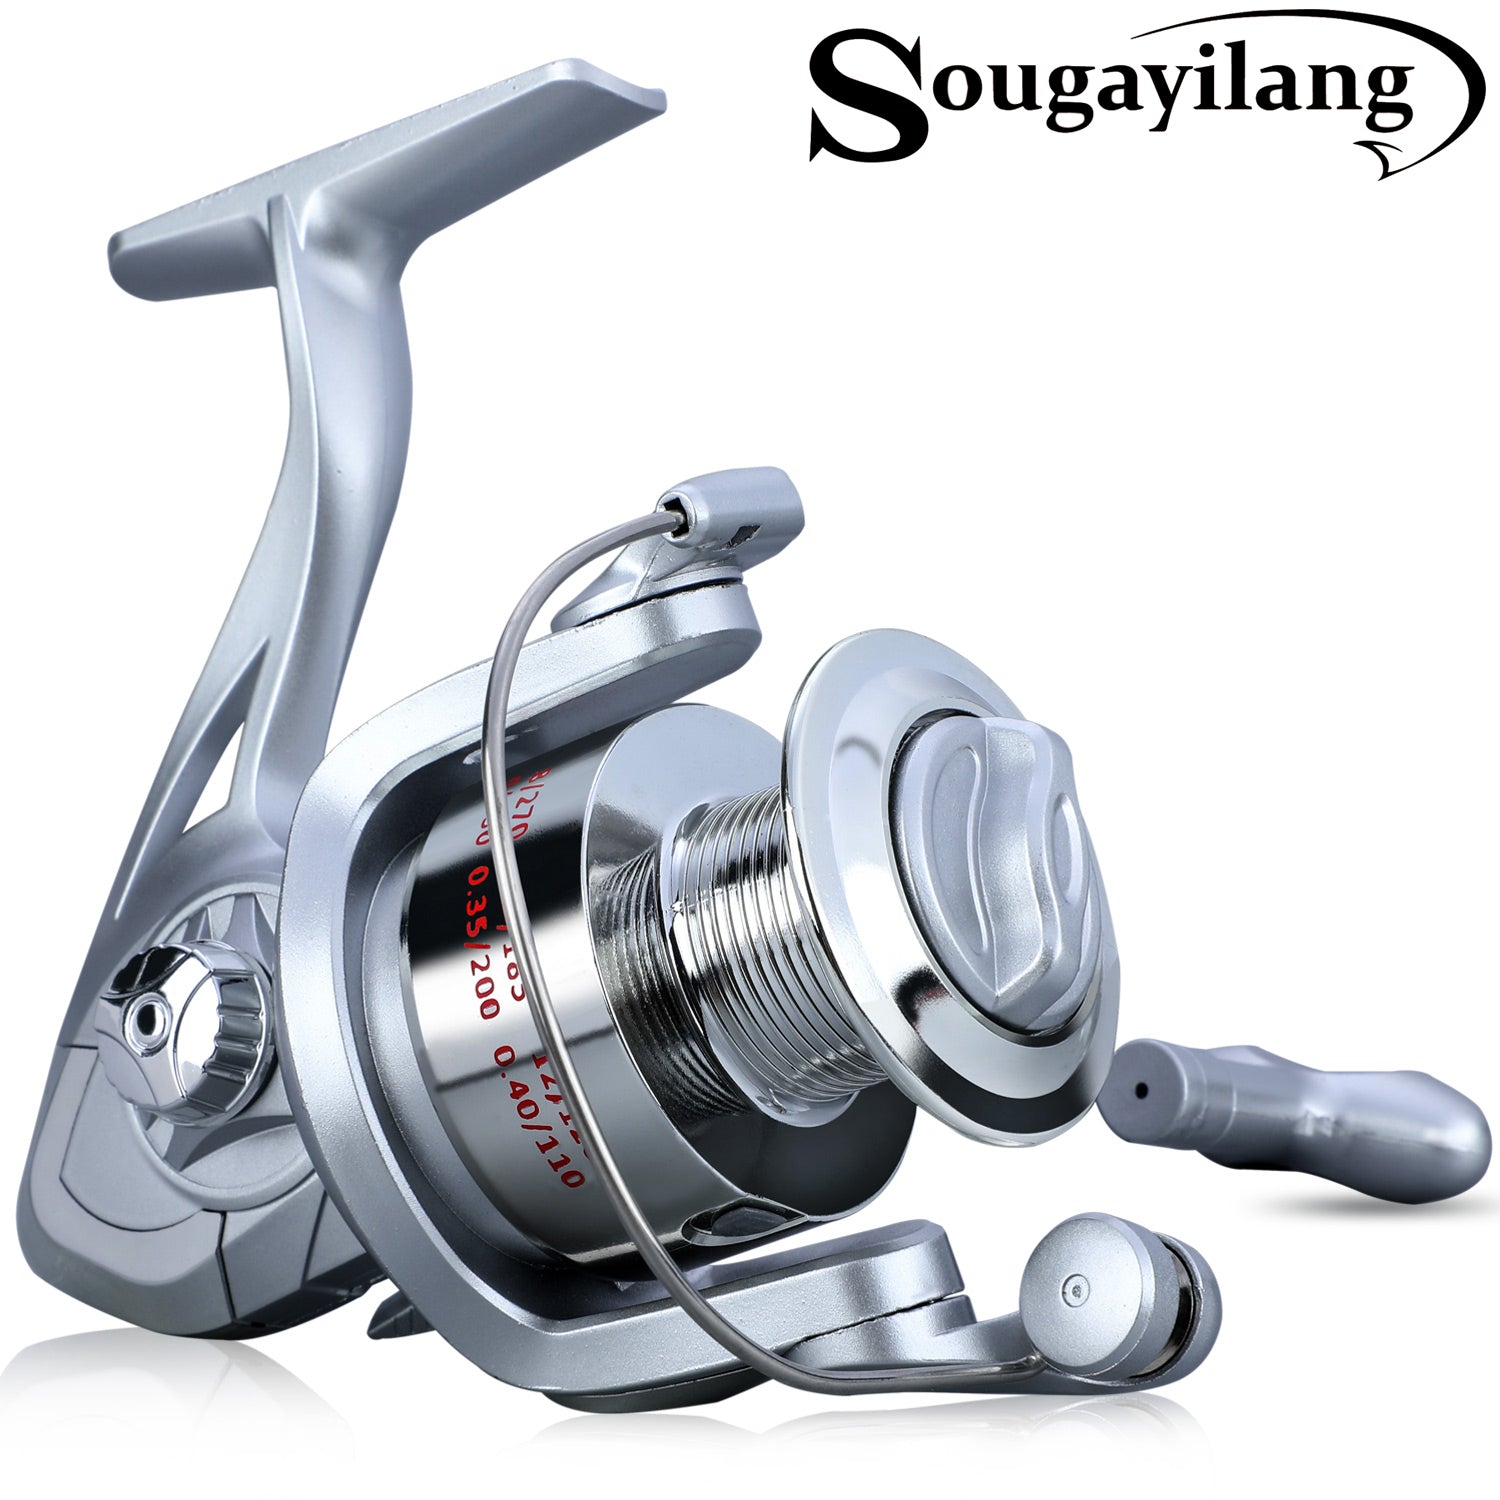 Sougayilang 1000-5000 Spinning Fishing Reel Max Drag 12kg Carp Wheel 5.1:1  5.5:1 High Speed Ratio Reel with Free Spool Tackle